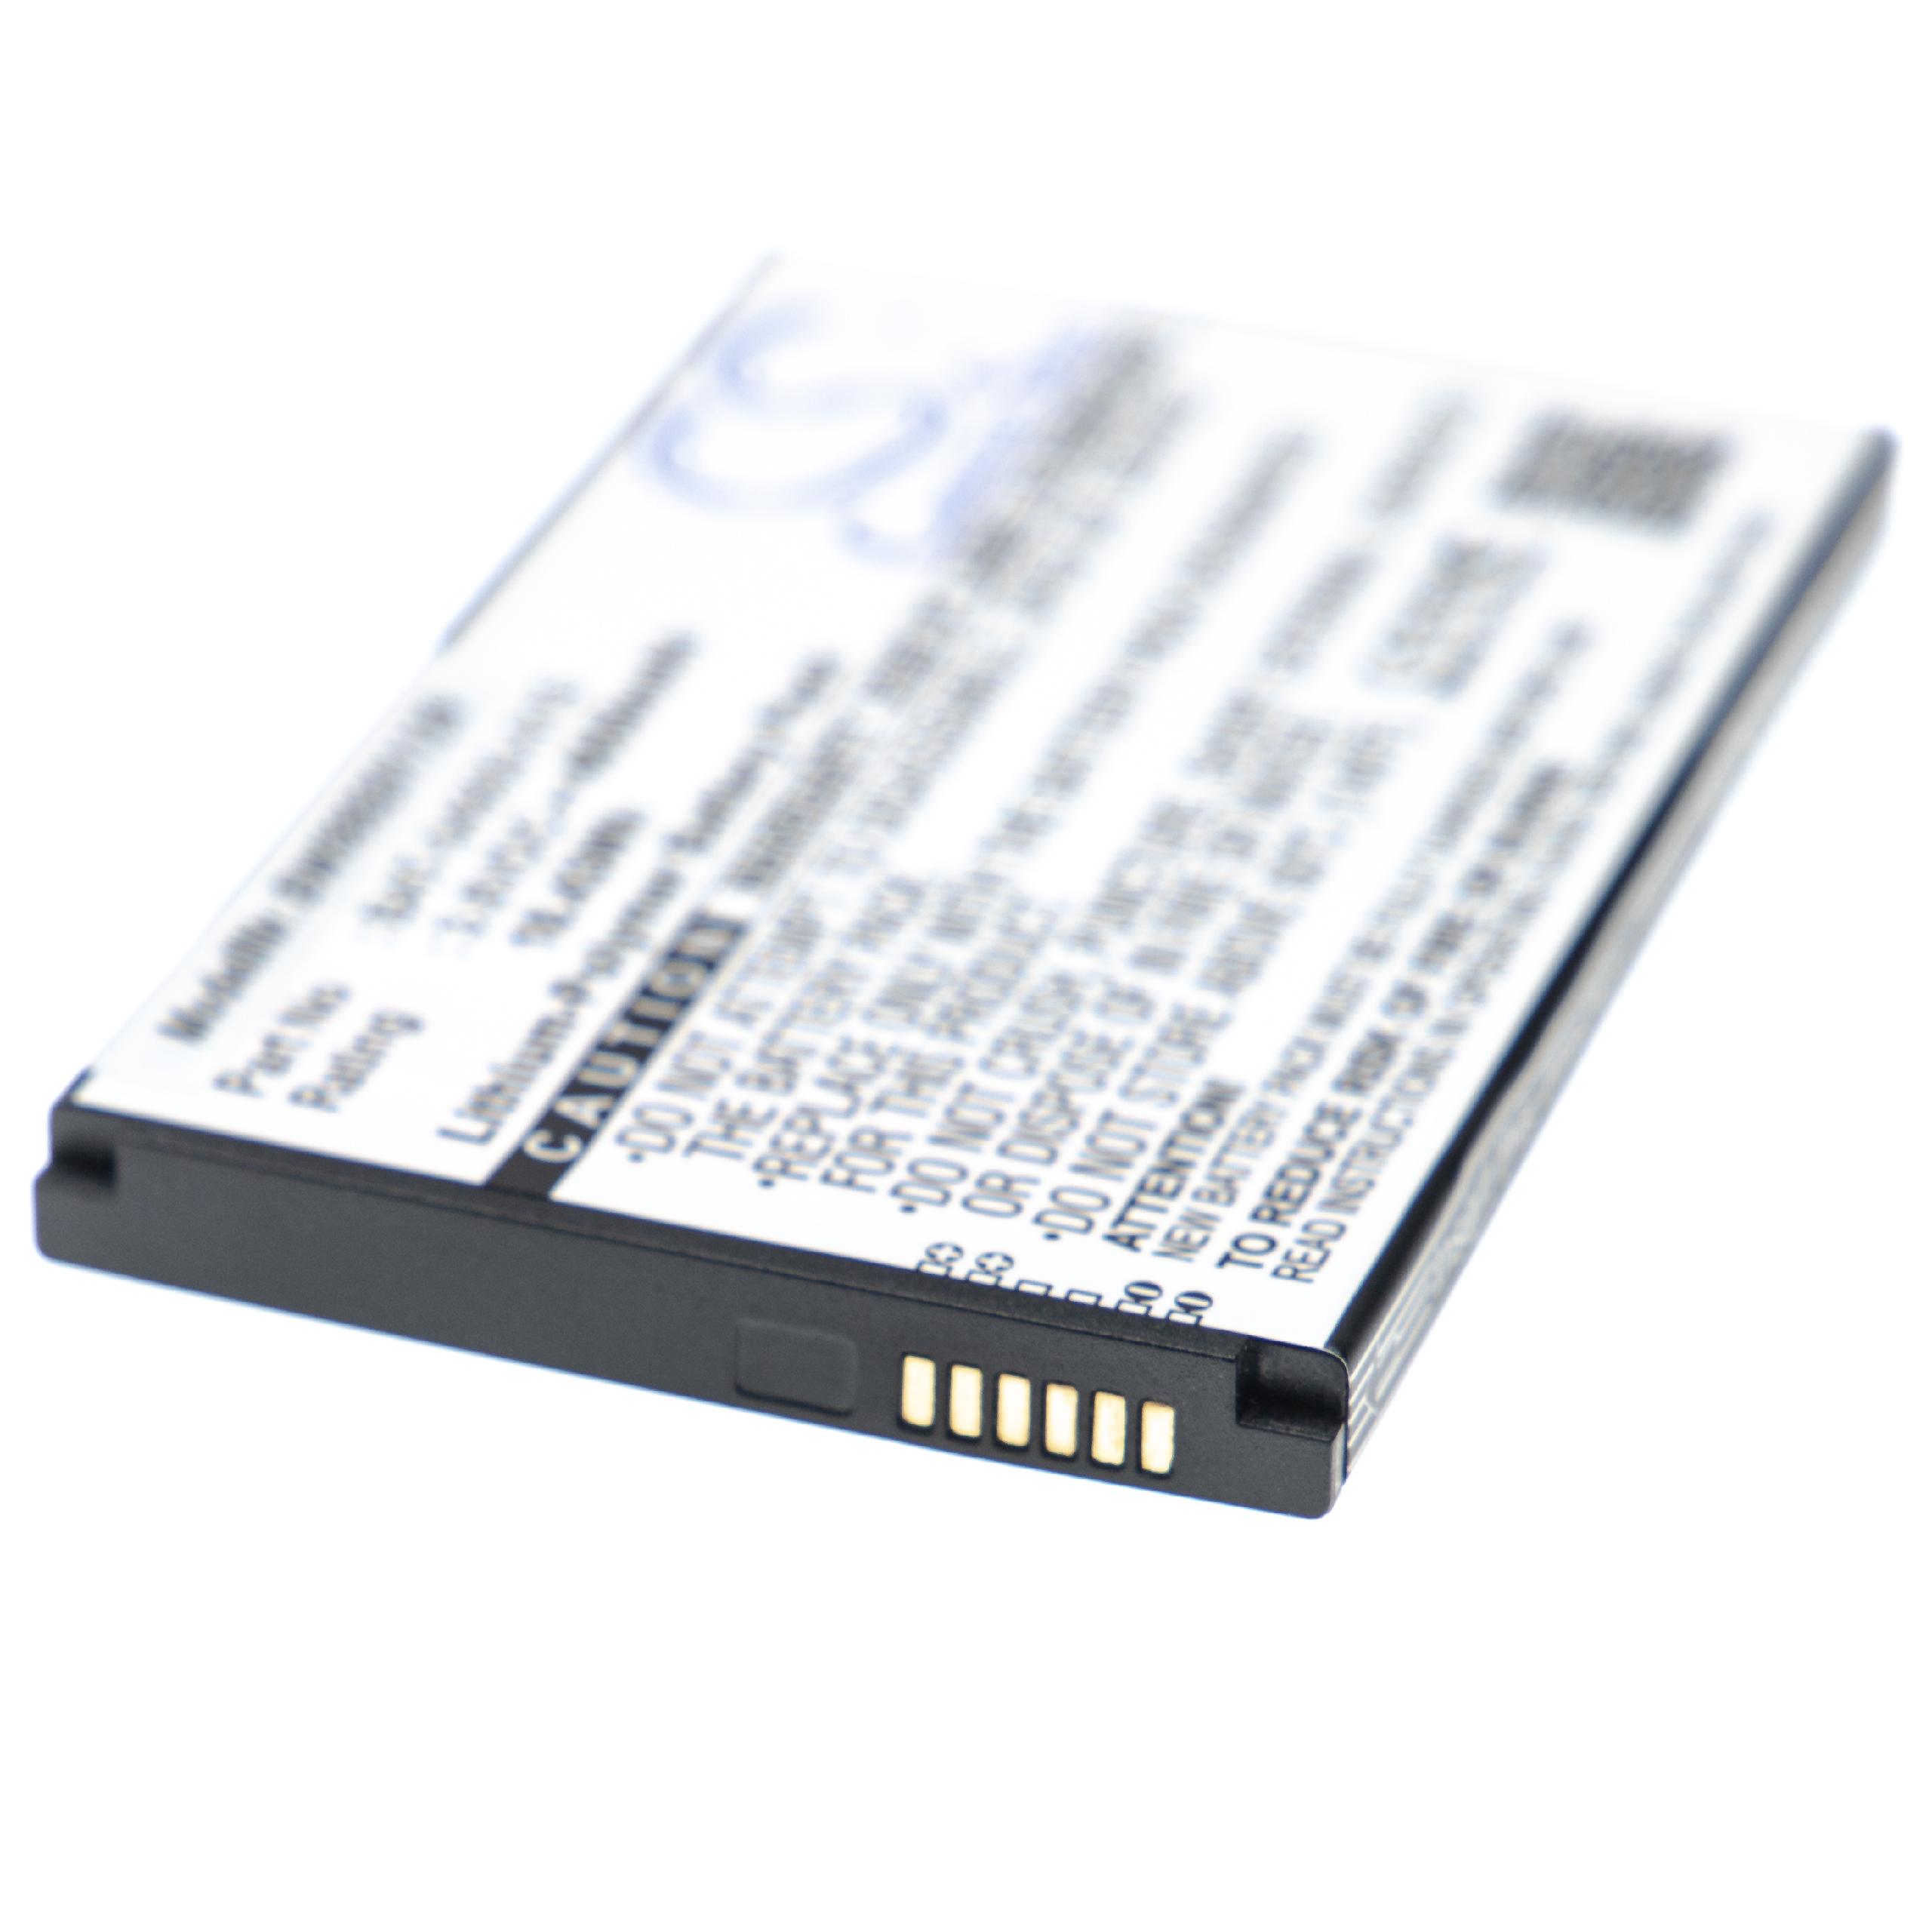 Mobile Phone Battery Replacement for Sonim BAT-04900-01S - 4850mAh 3.8V Li-polymer